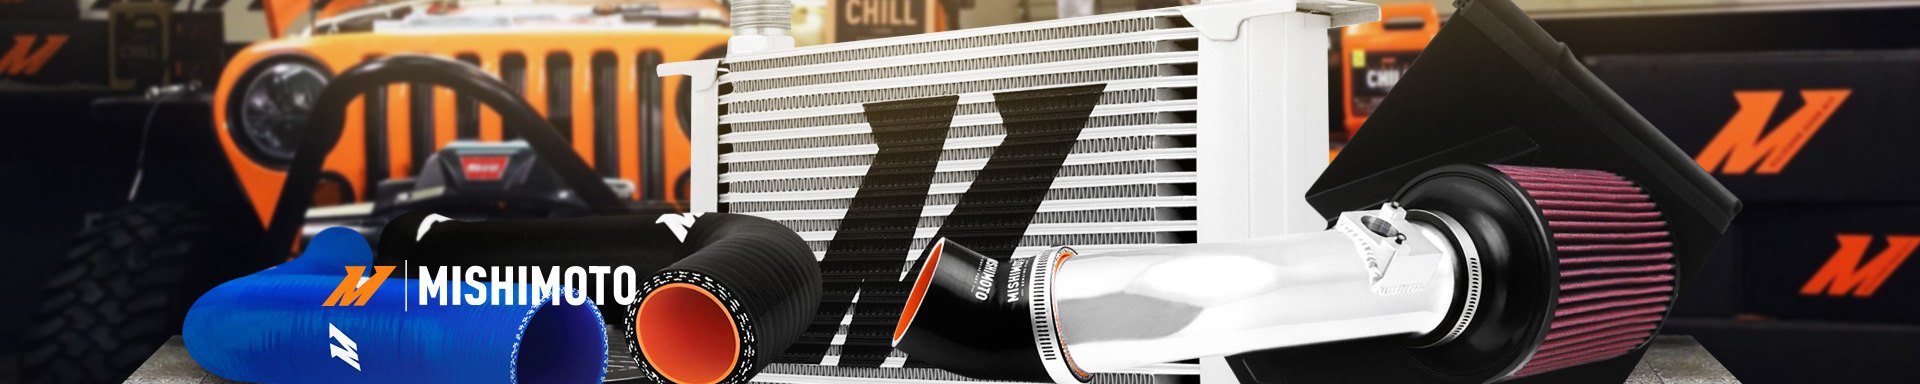 Mishimoto™ | Performance Cooling Parts, Radiators, Intercoolers - CARiD.com